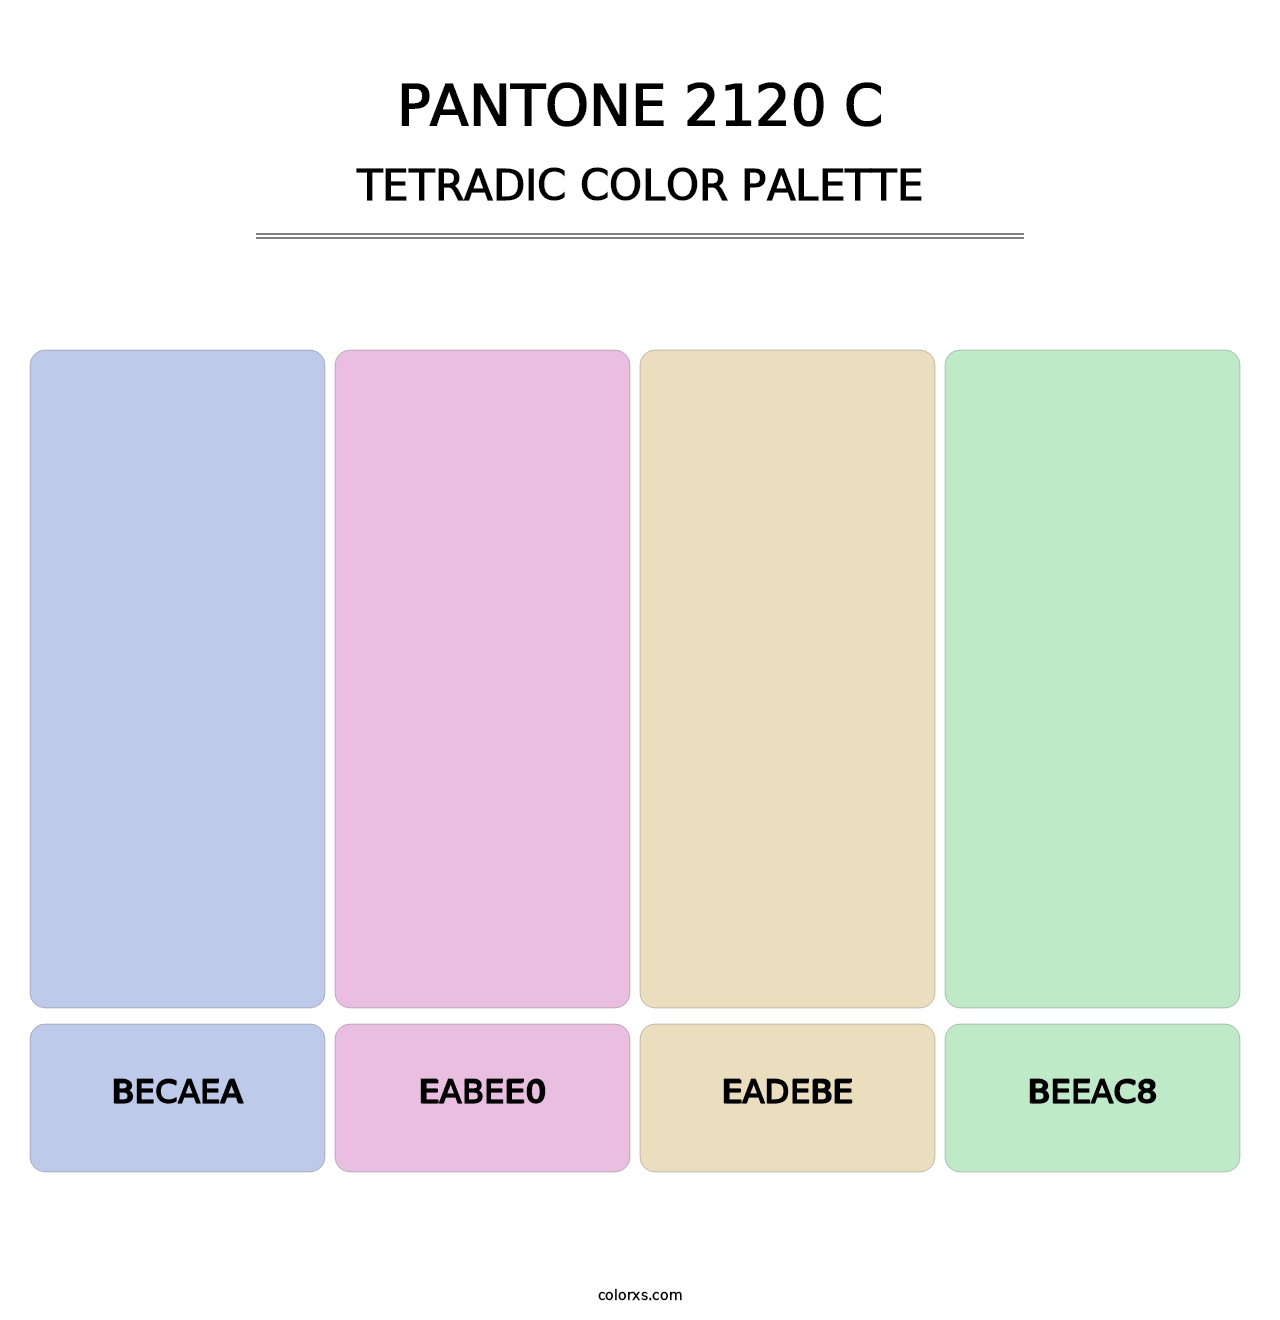 PANTONE 2120 C - Tetradic Color Palette